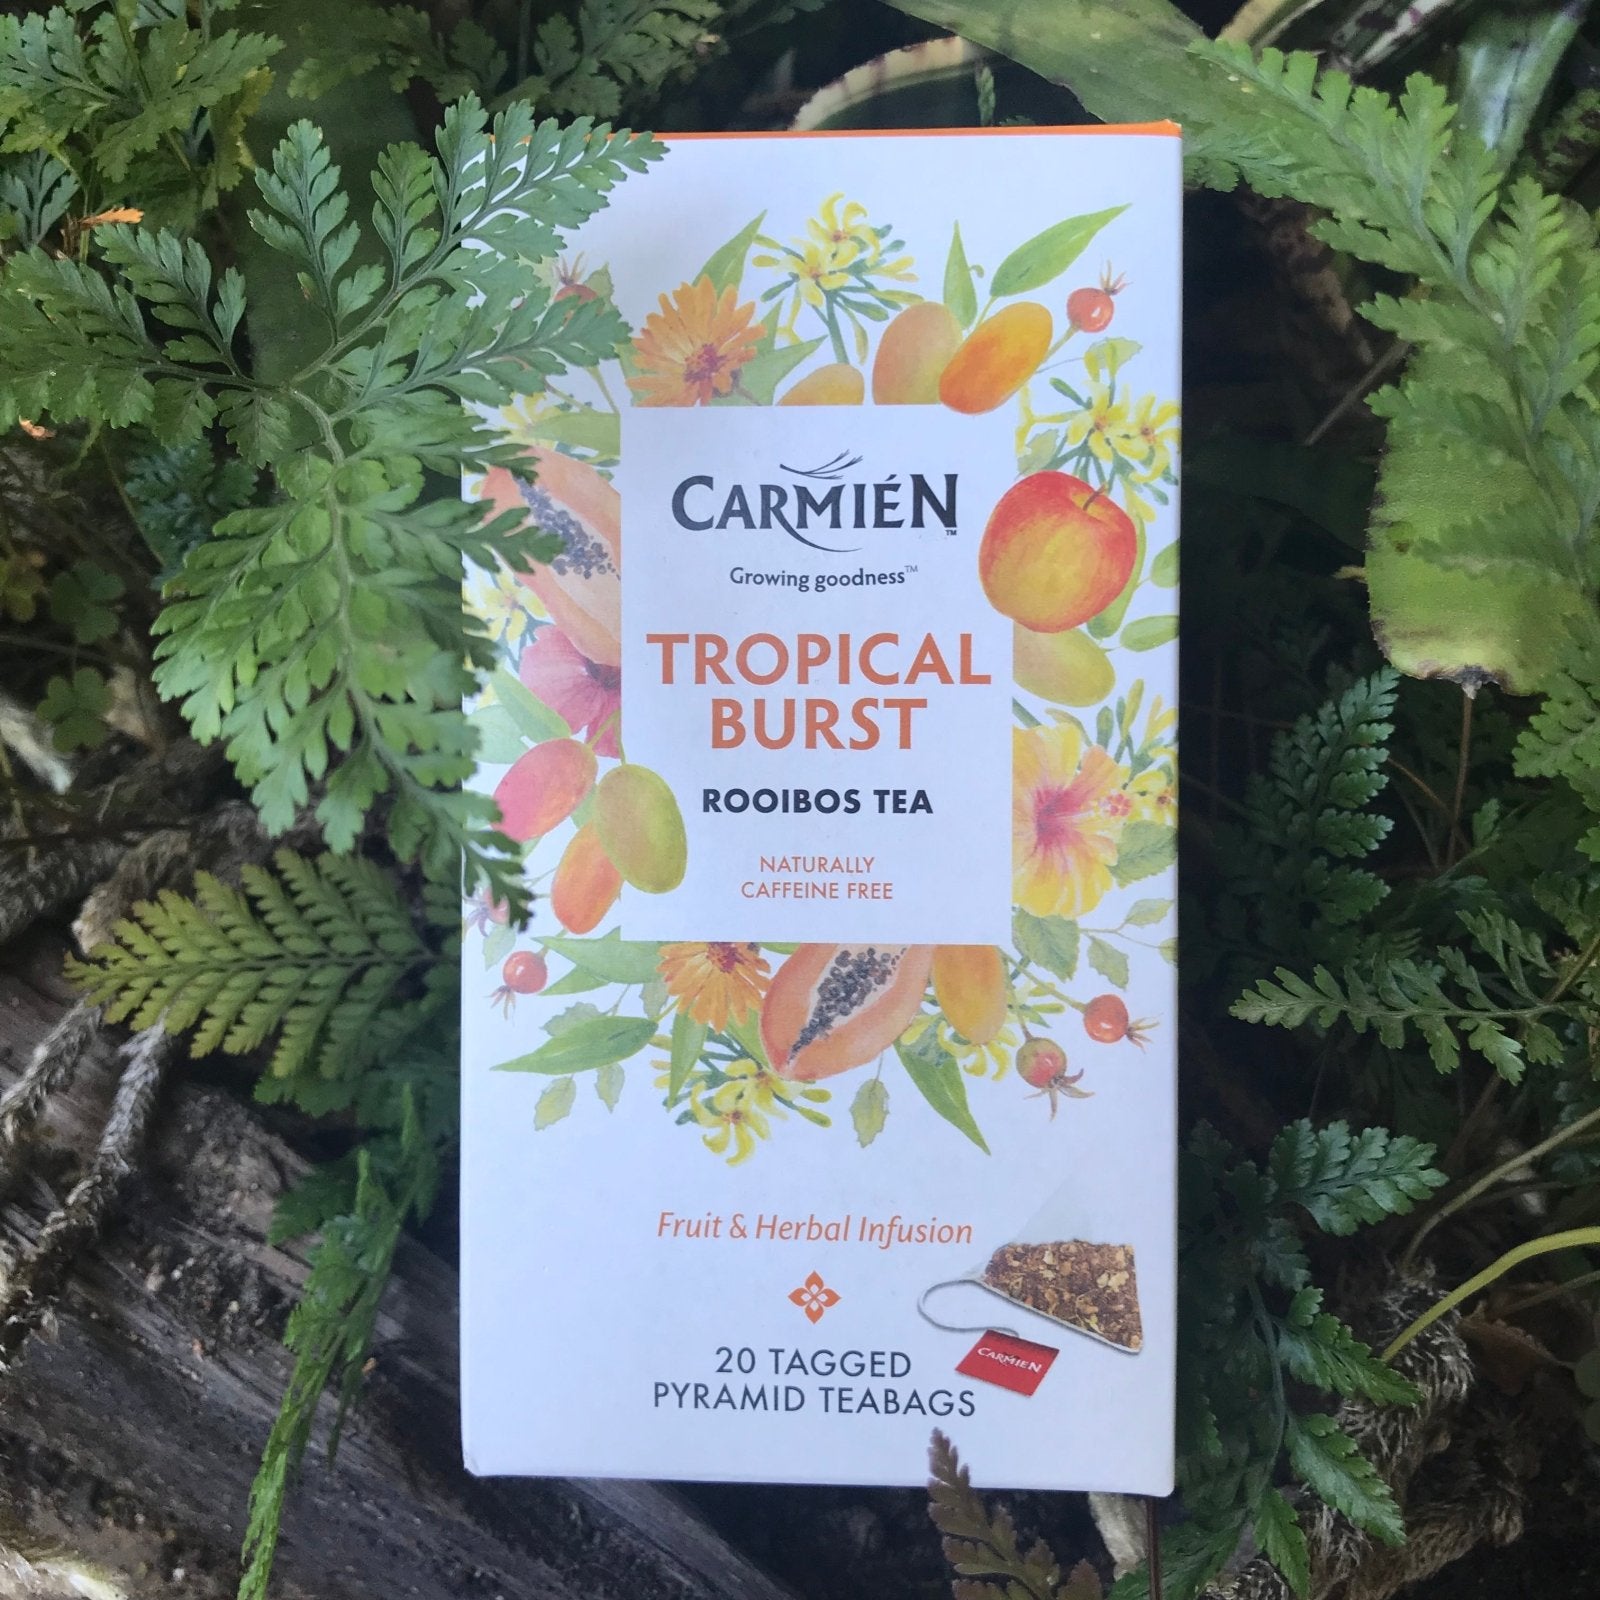 Carmien Tropical Burst Rooibos Tea (20 tagged pyramid teabags) - The Deli